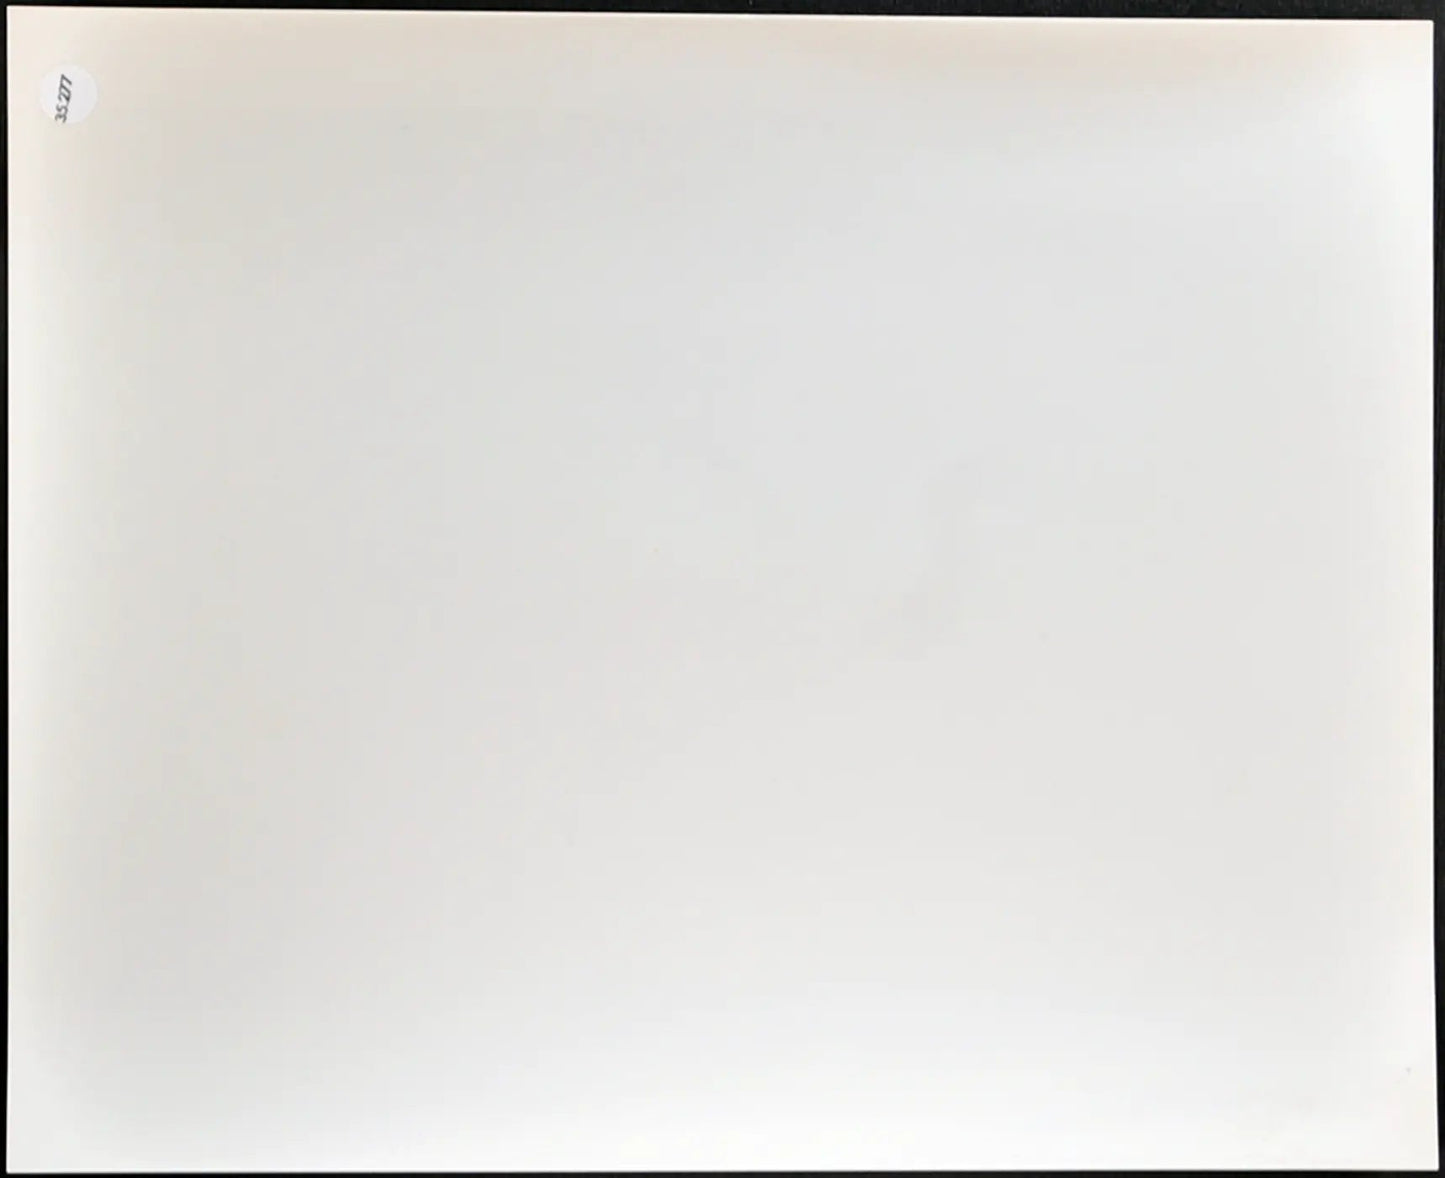 Anthony Perkins Film Psycho II 1983 Ft 35277 - Stampa 24x18 cm - Farabola Stampa ai sali d'argento